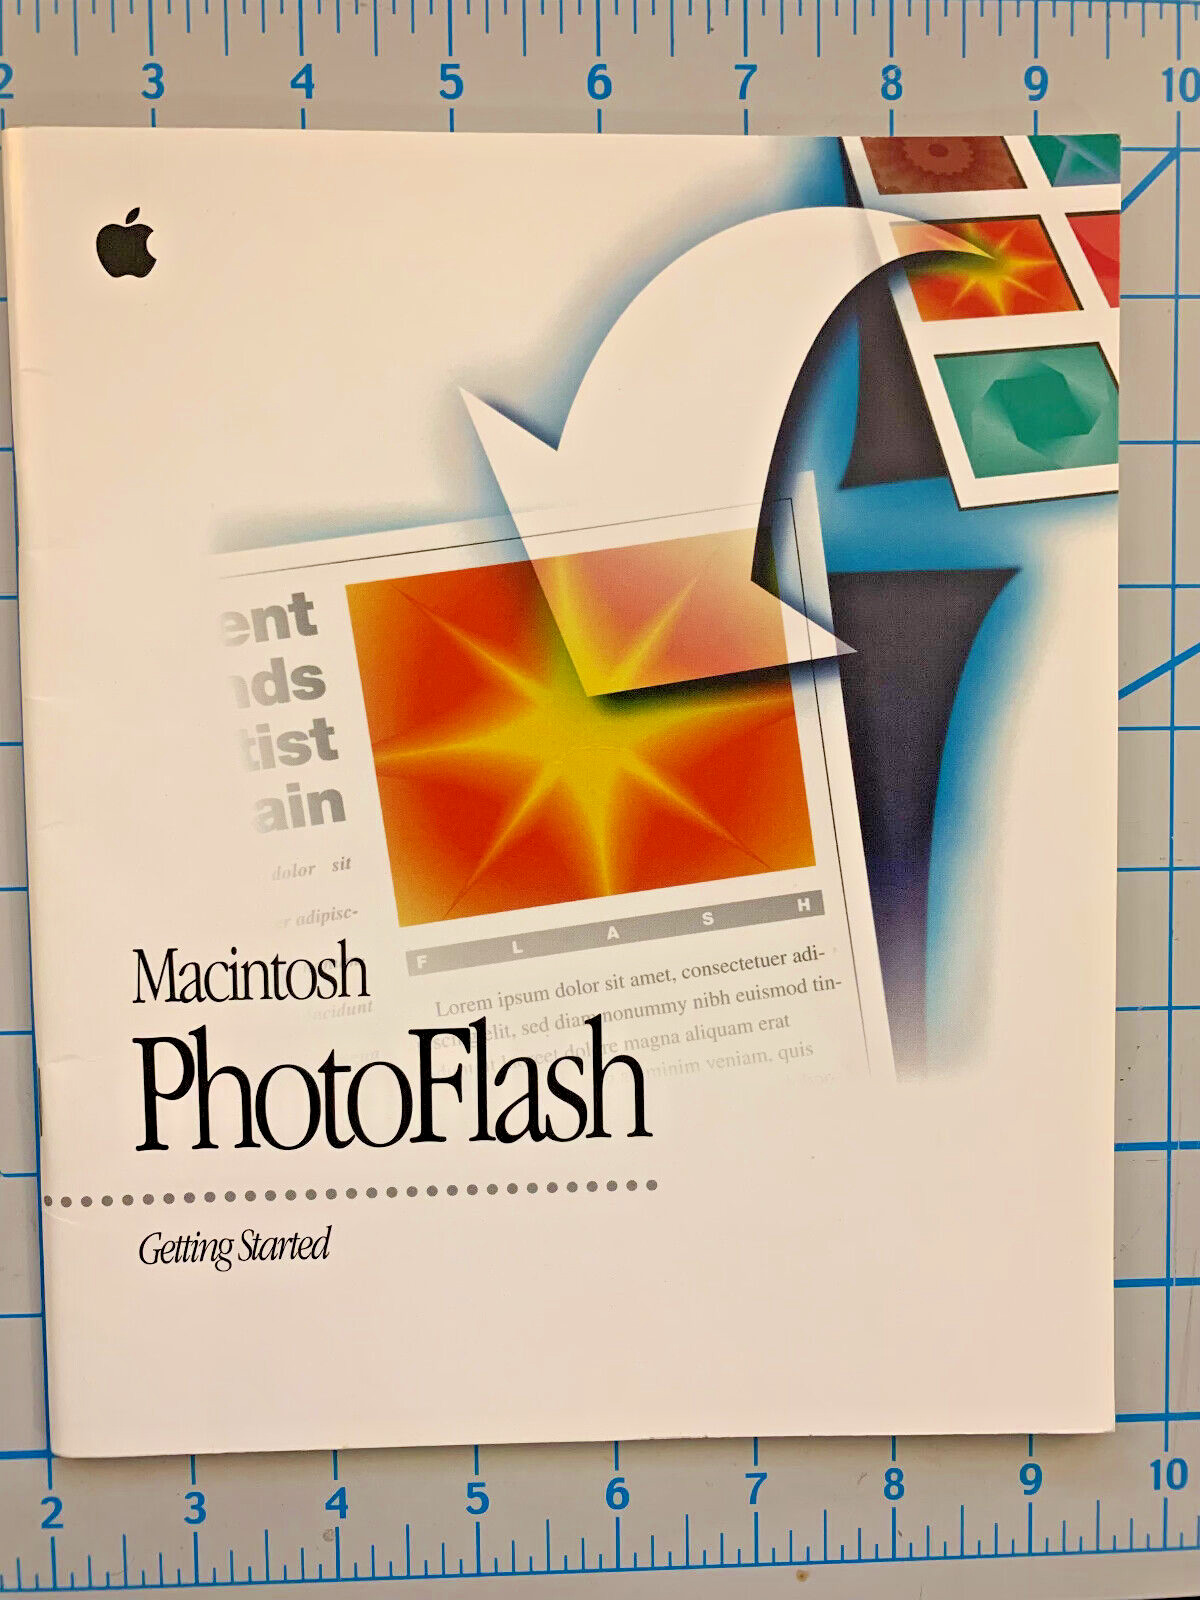 Macintosh PhotoFlash Getting Started 1994 030-6283-A